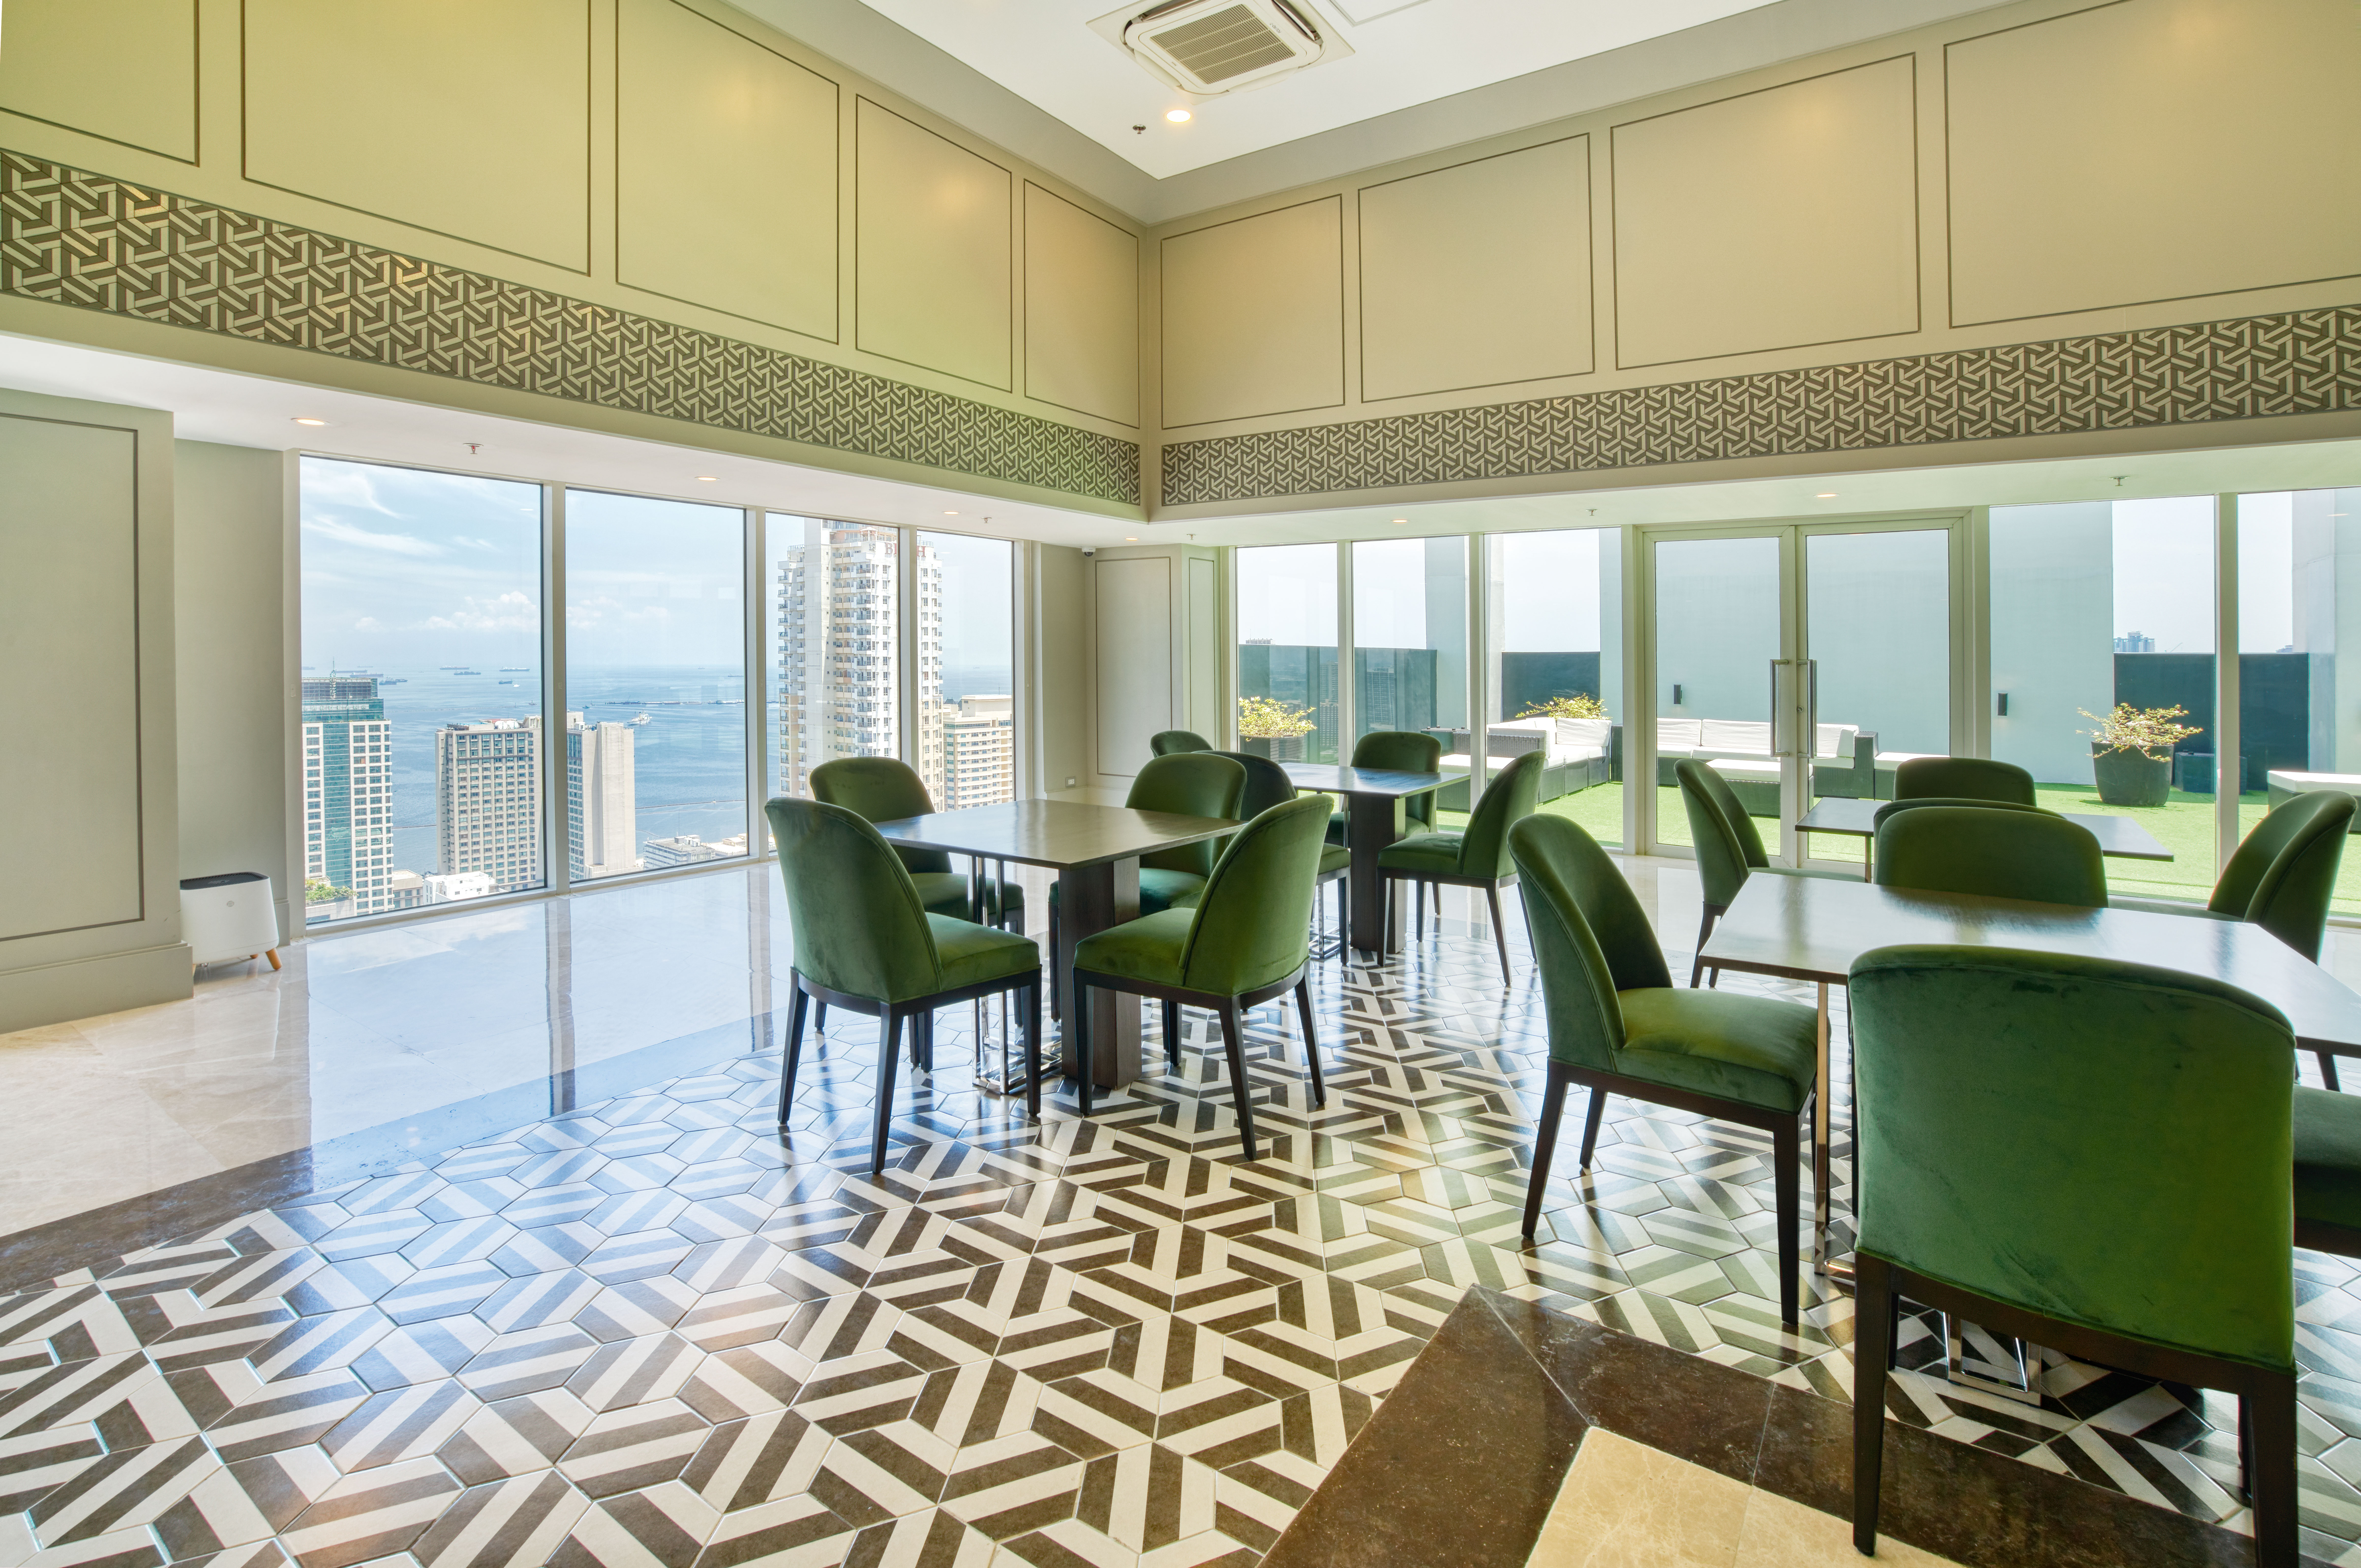 Torre Lorenzo Malate sky lounge area: vintage modern design tiles and furniture